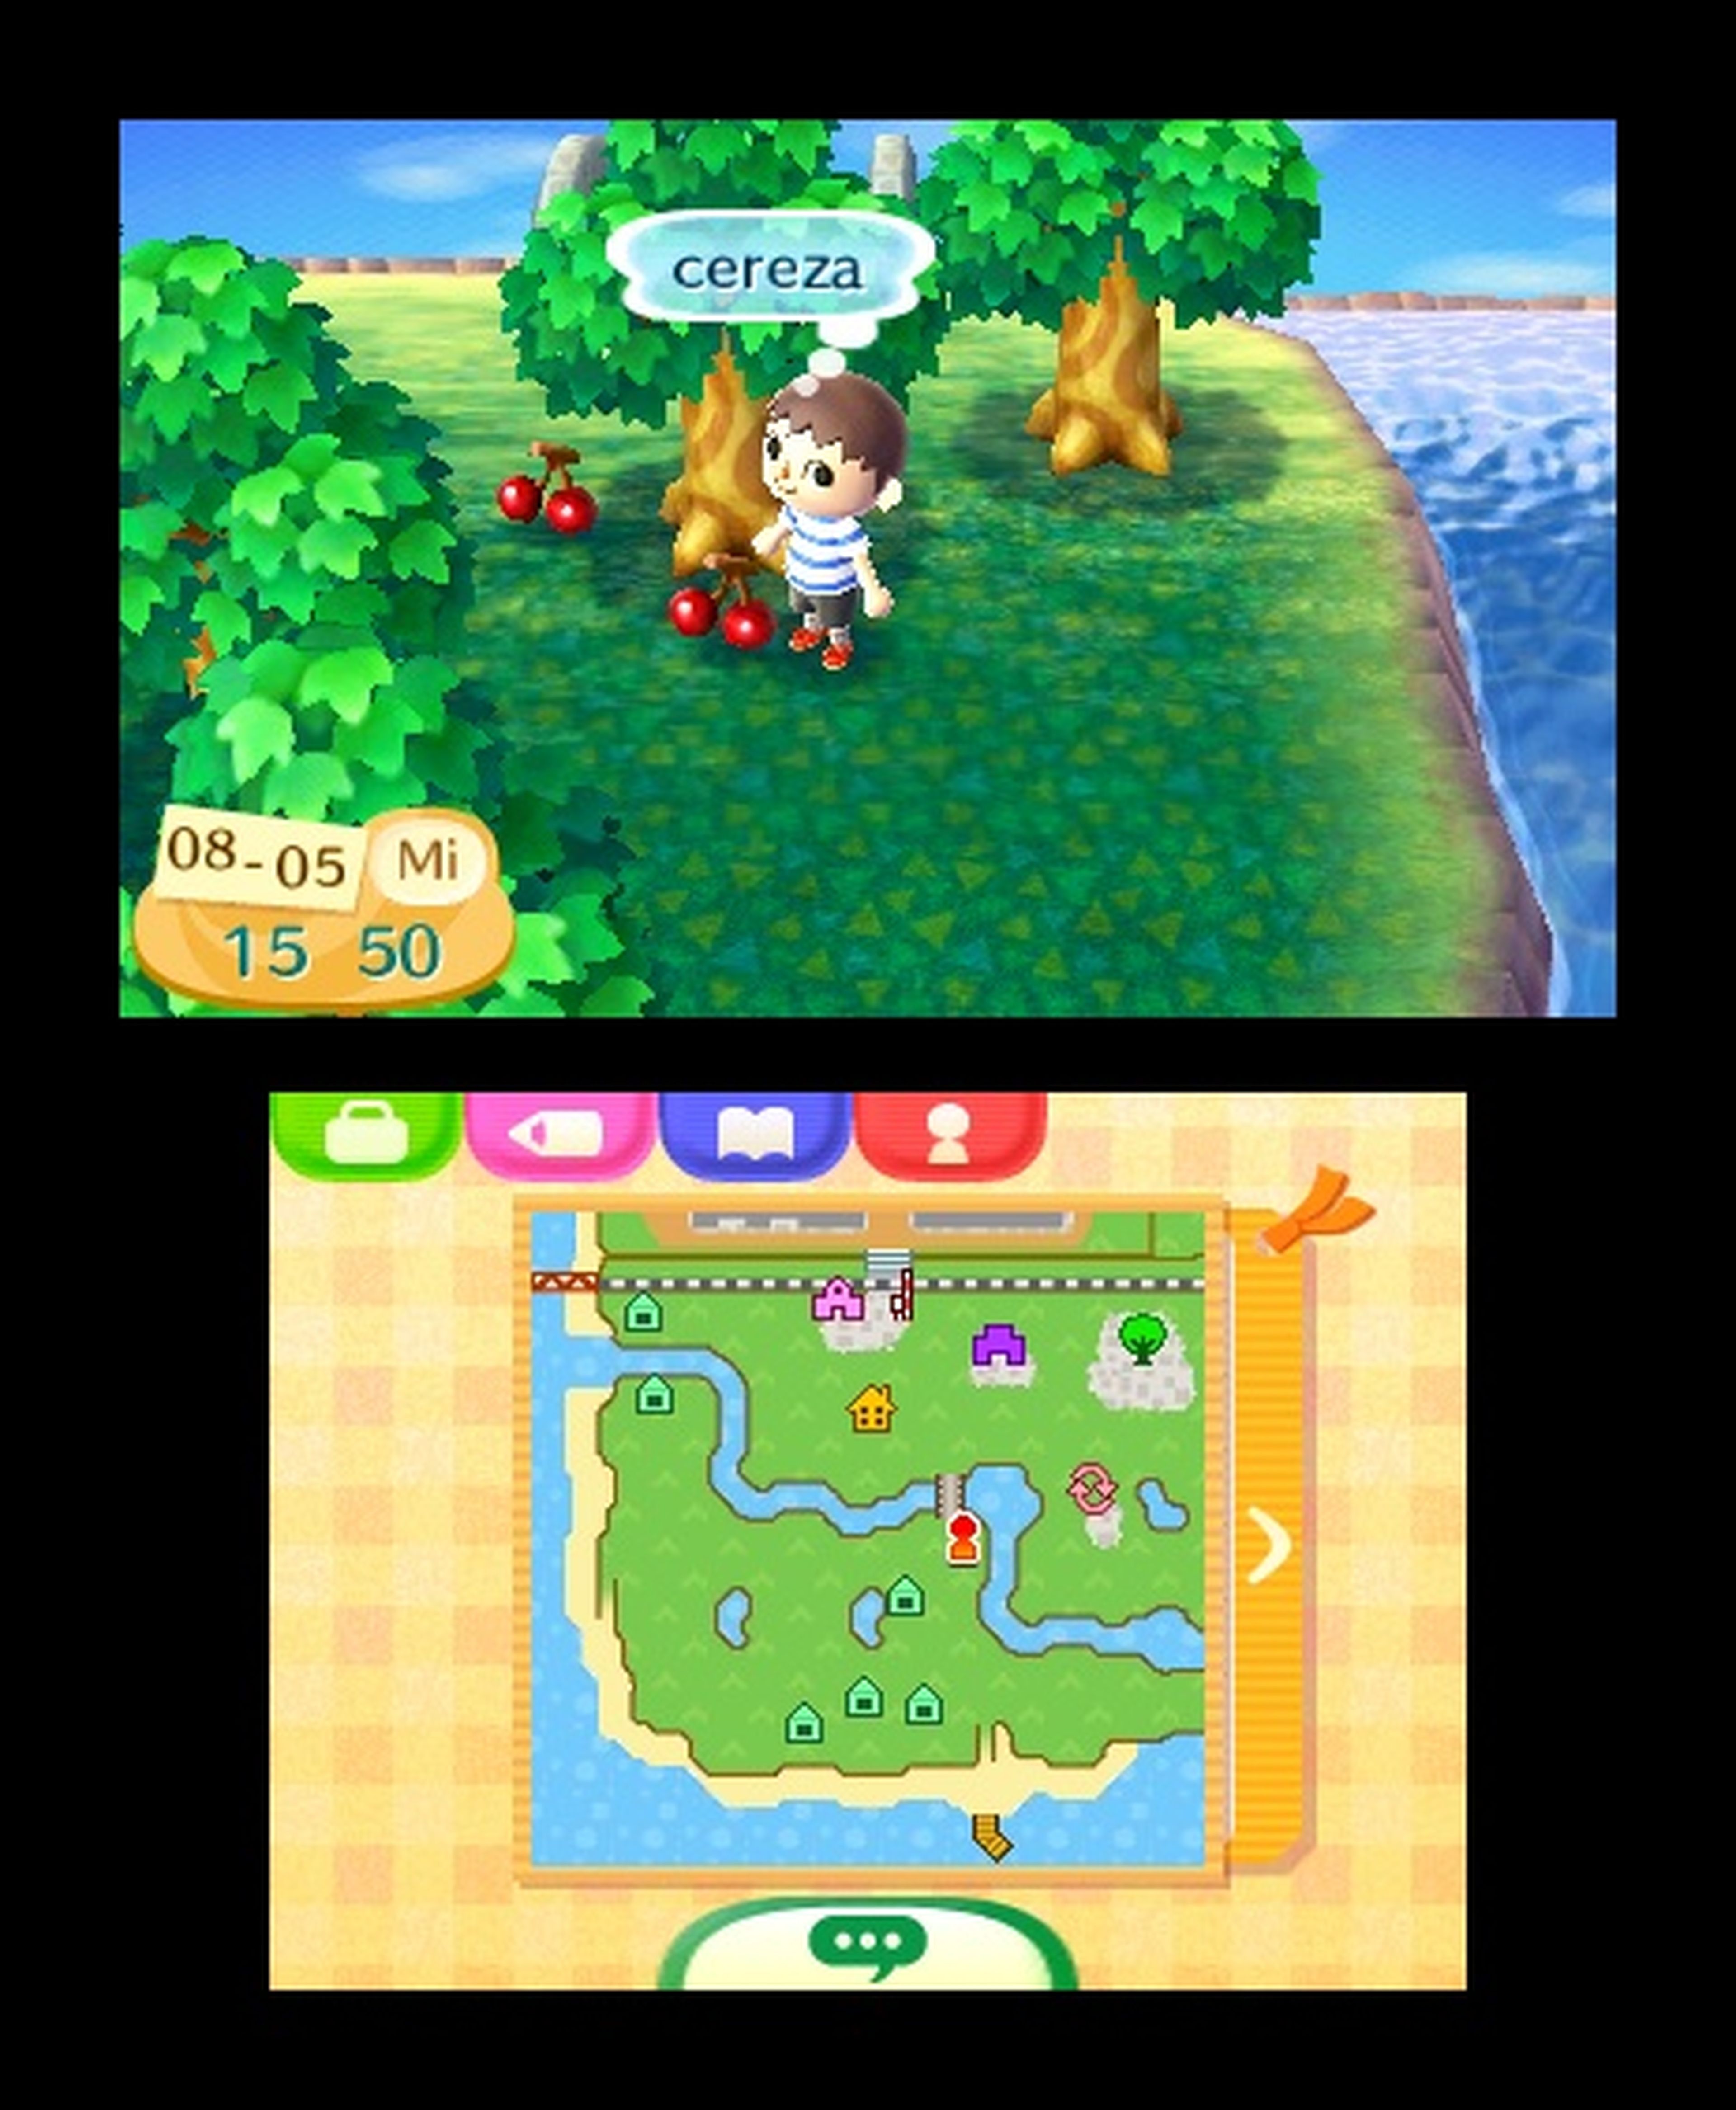 Animal Crossing New Leaf: El multijugador